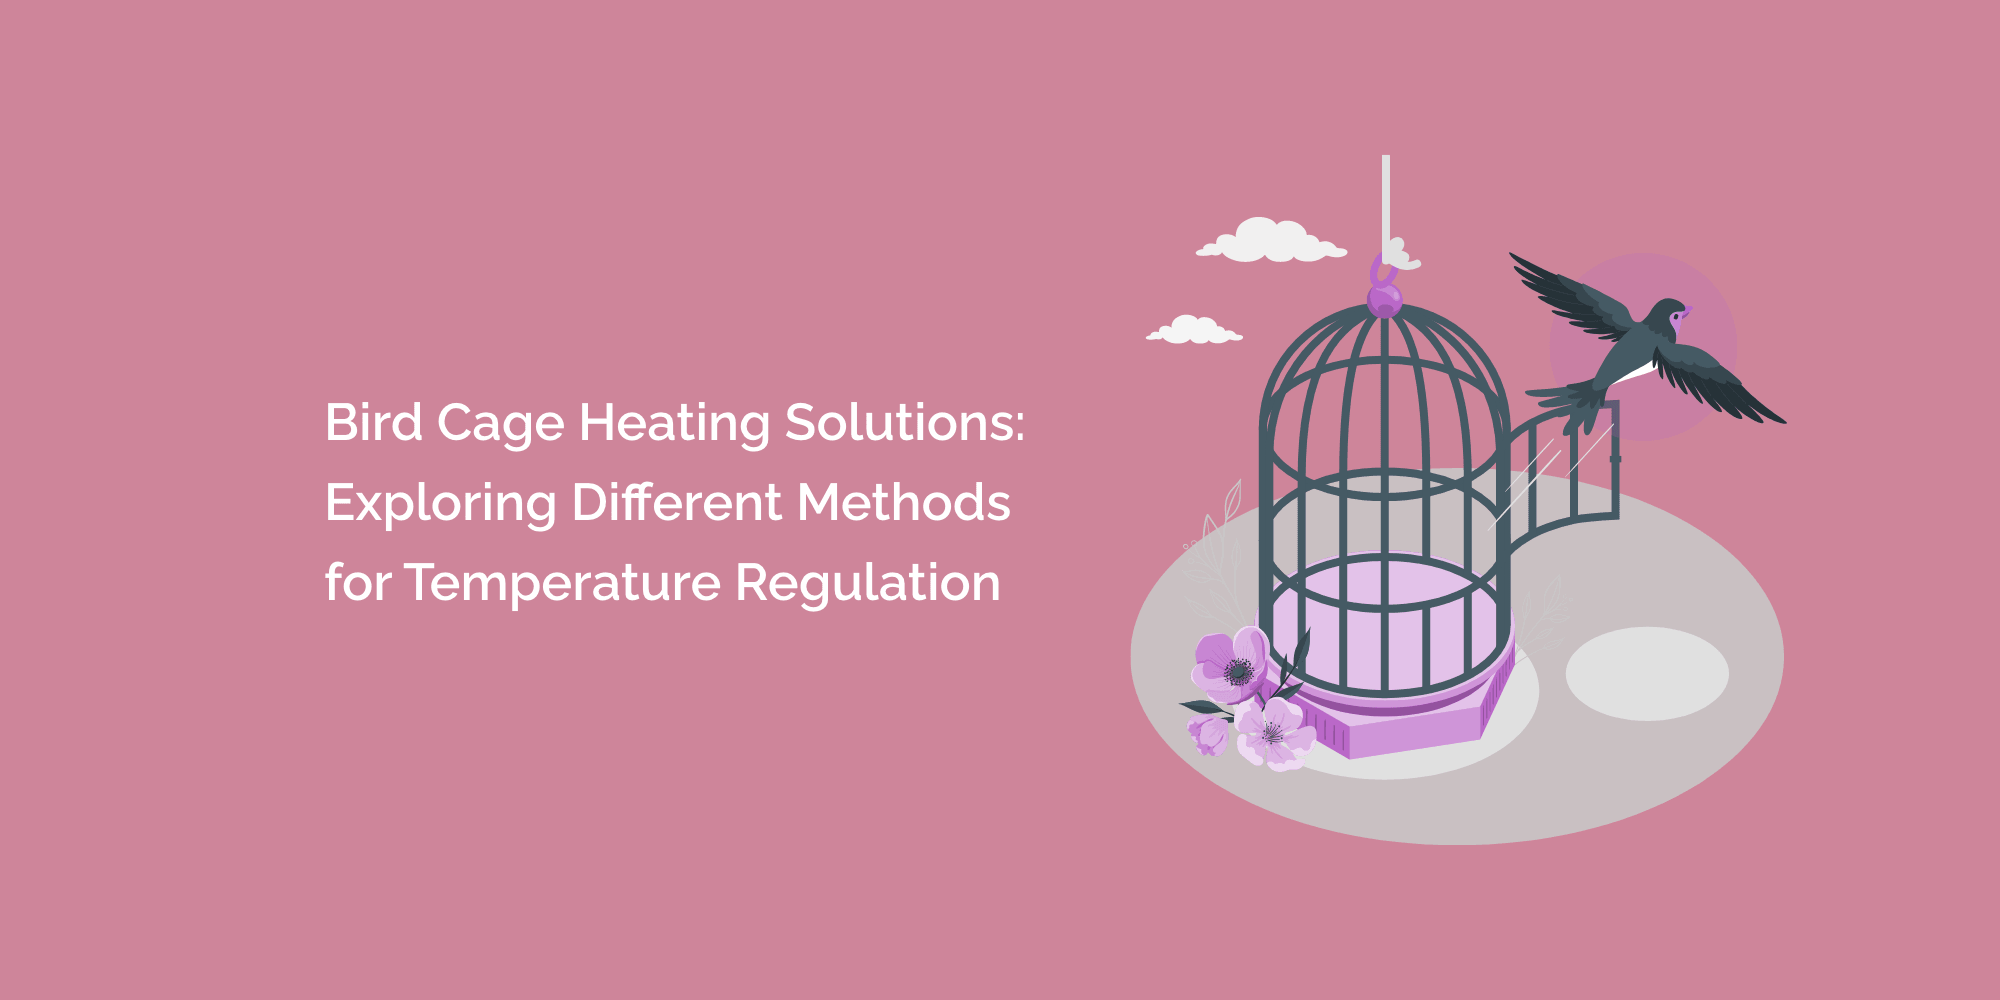 Bird Cage Heating Solutions: Exploring Different Methods for Temperature Regulation